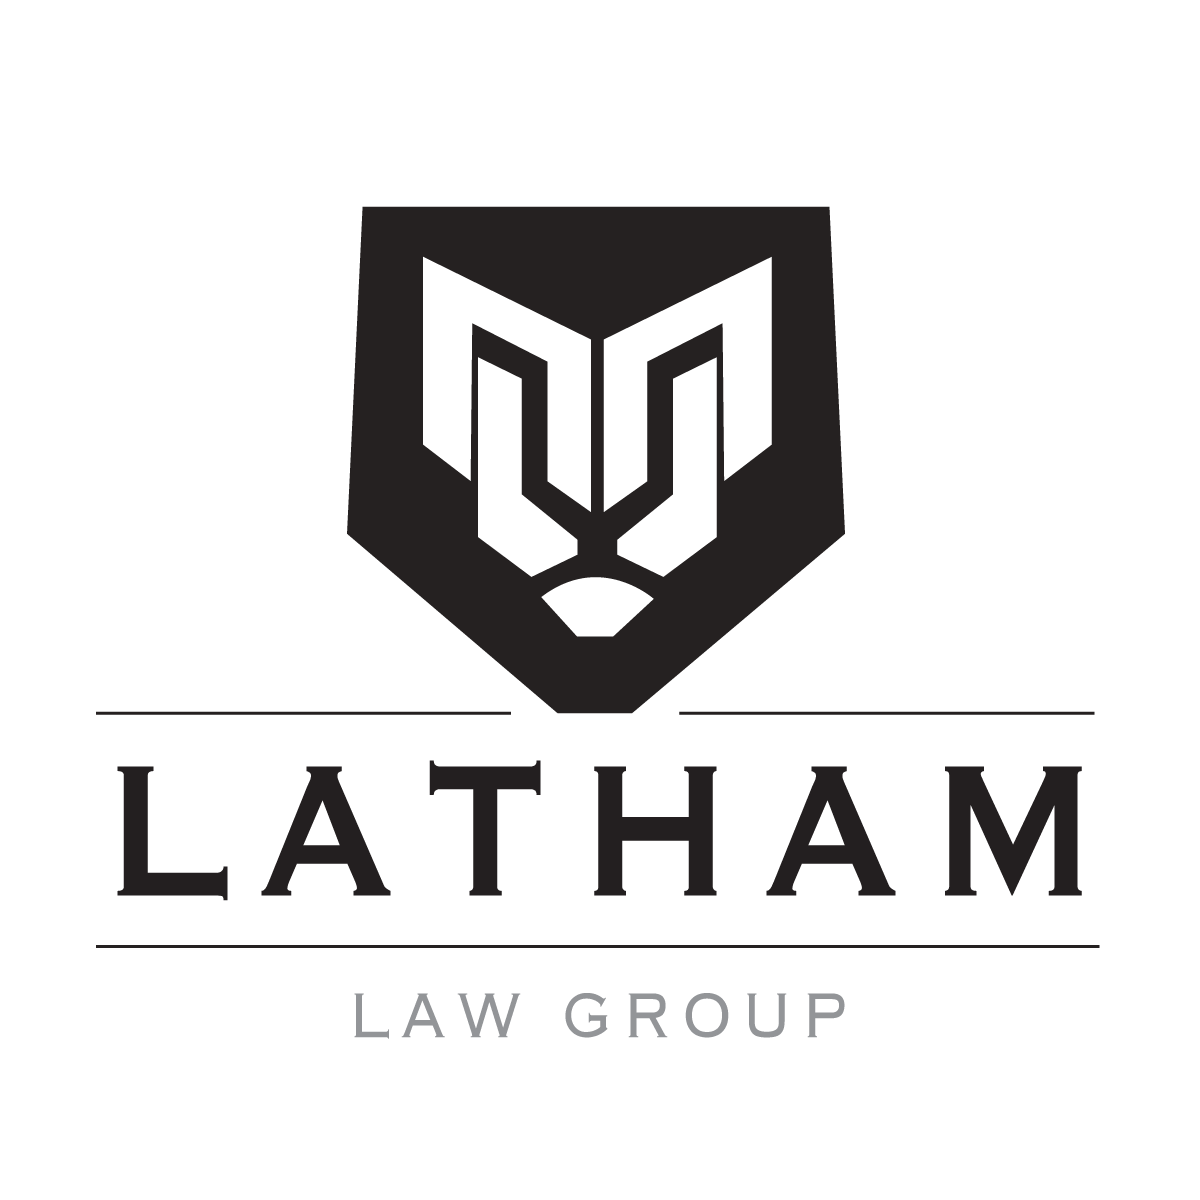 LATHAM LAW GROUP